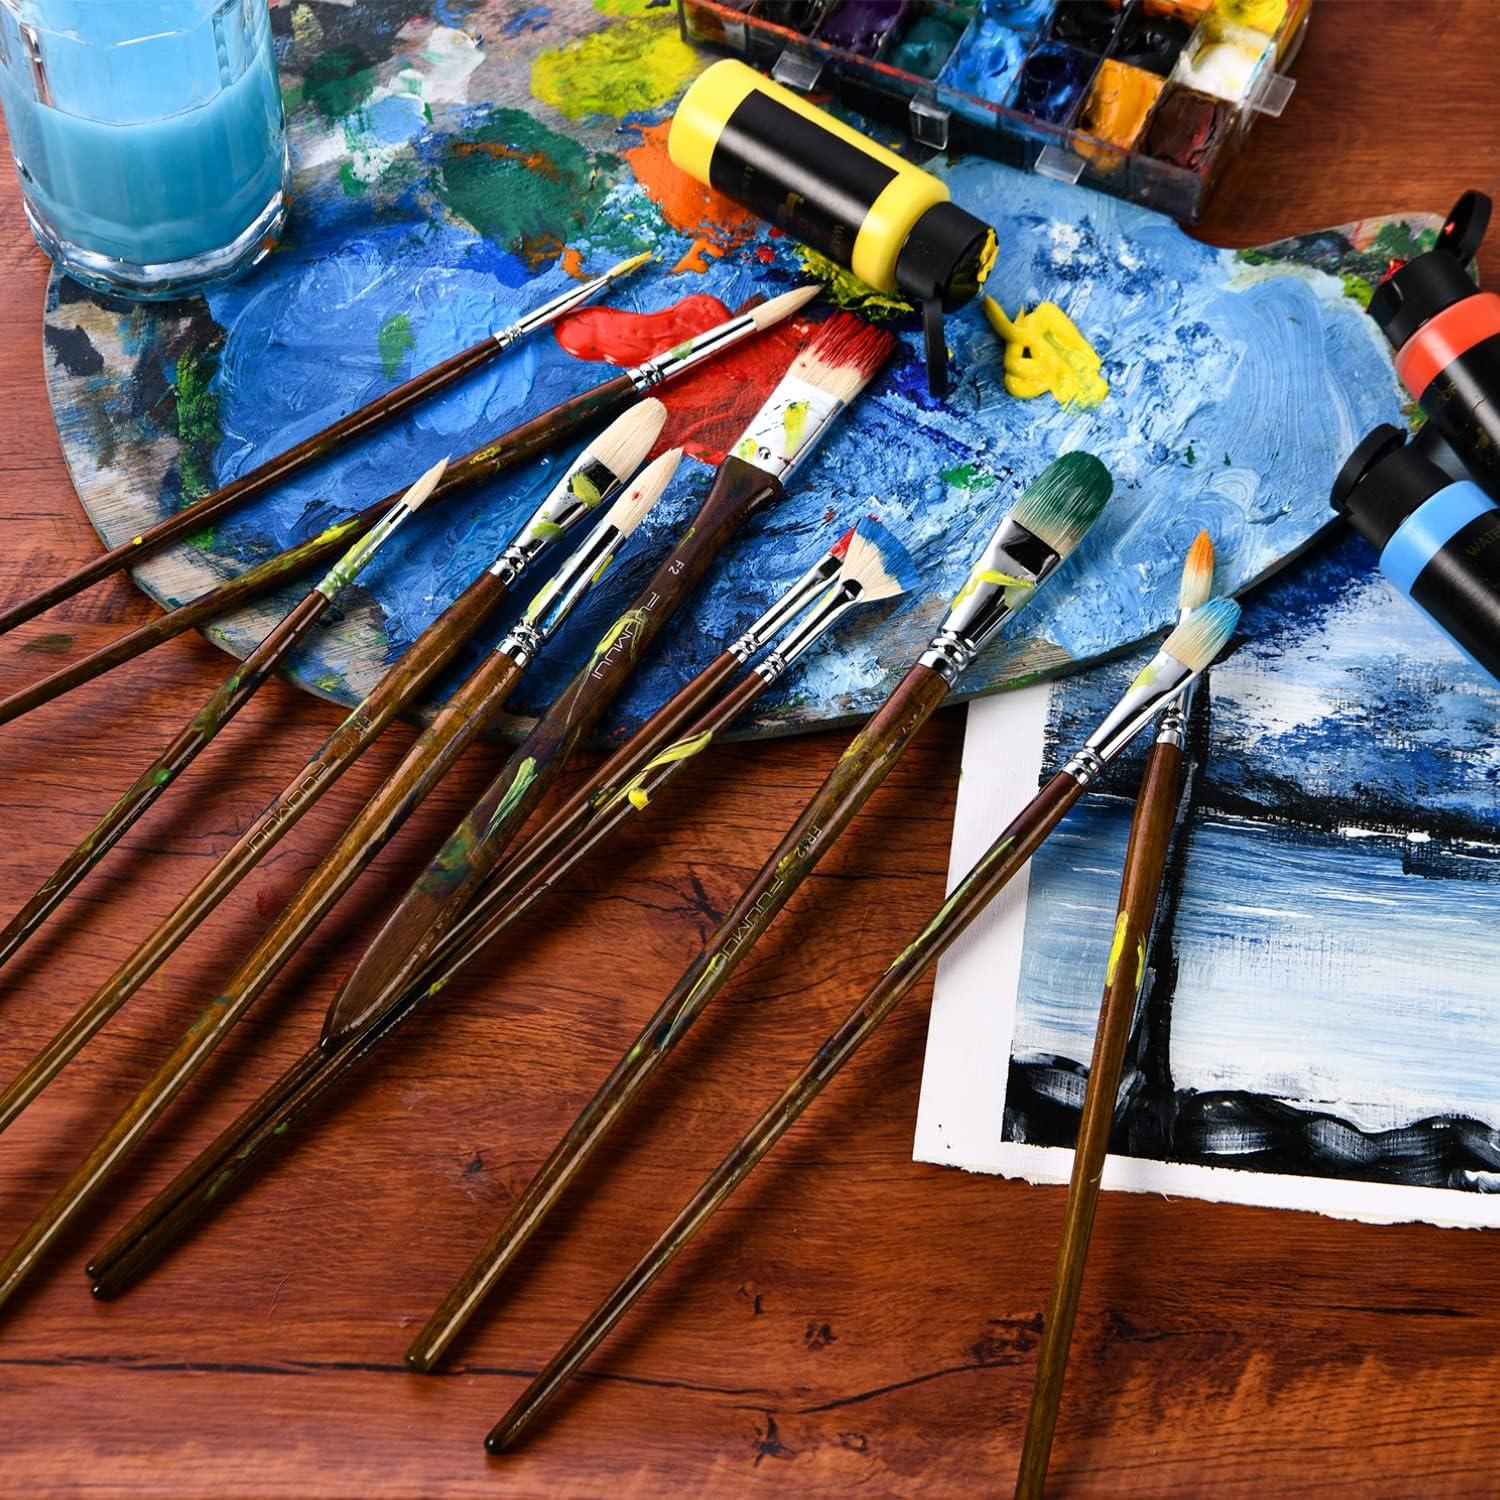 11pcs Professional Paint Brush Set, 100% Natural Chungking Hog Bristle  Artist Brushes for Acrylic 